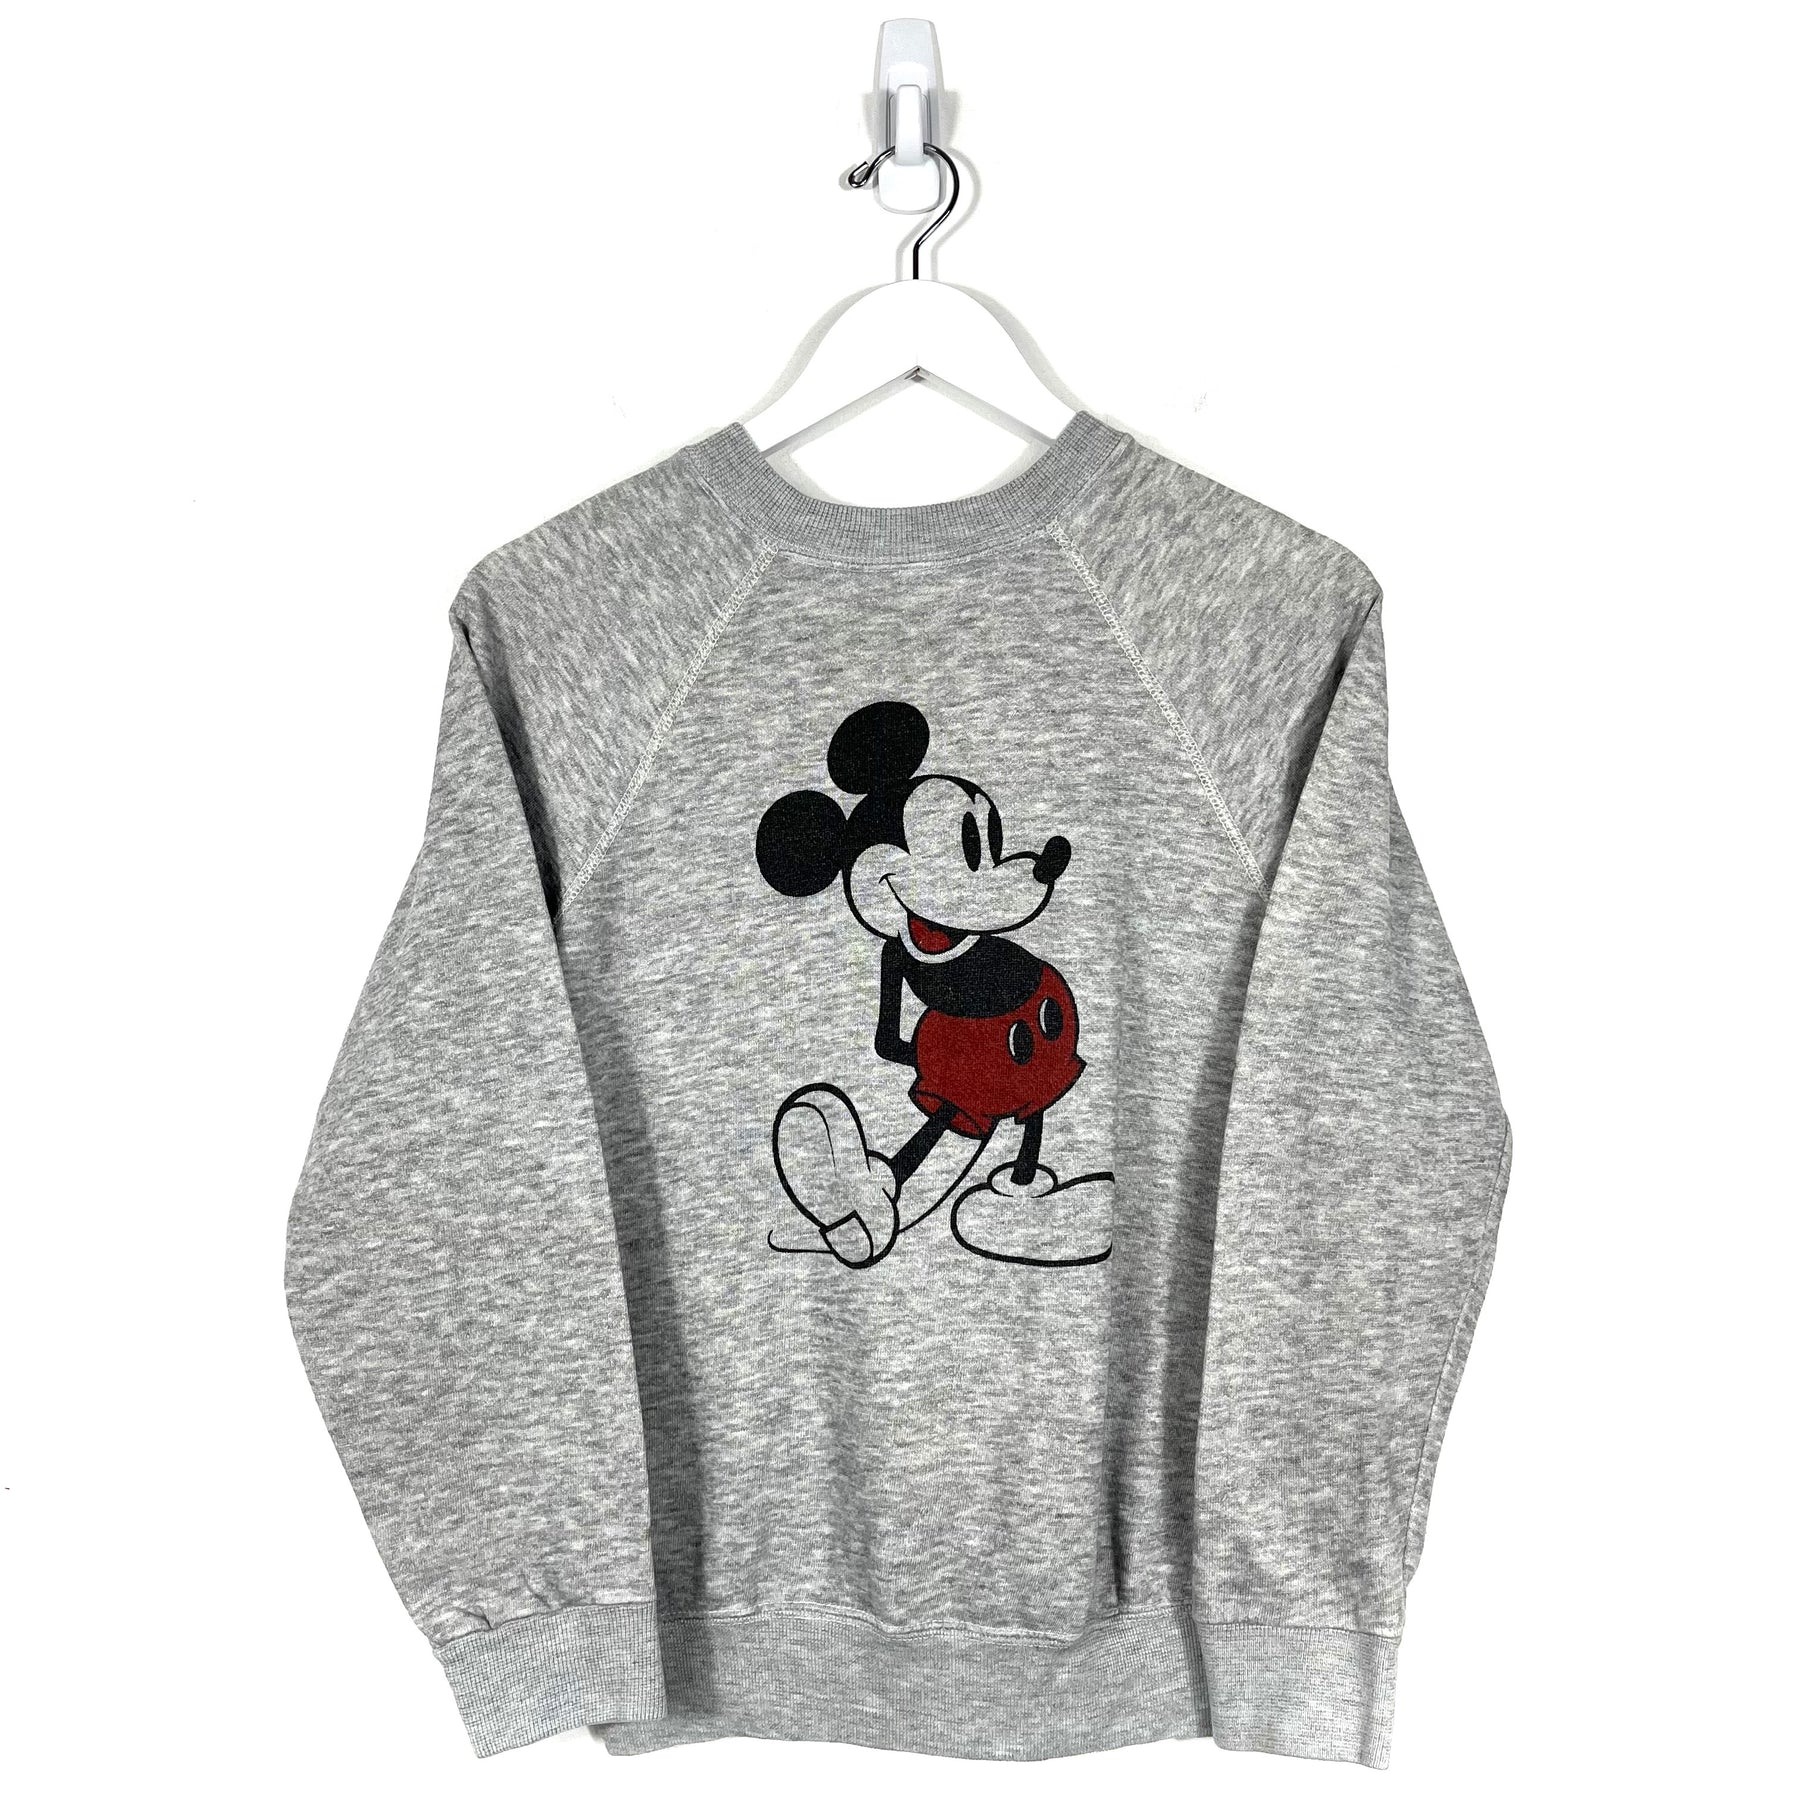 Vintage 80s Disney Mickey Mouse Crewneck Sweatshirt - Women's Small